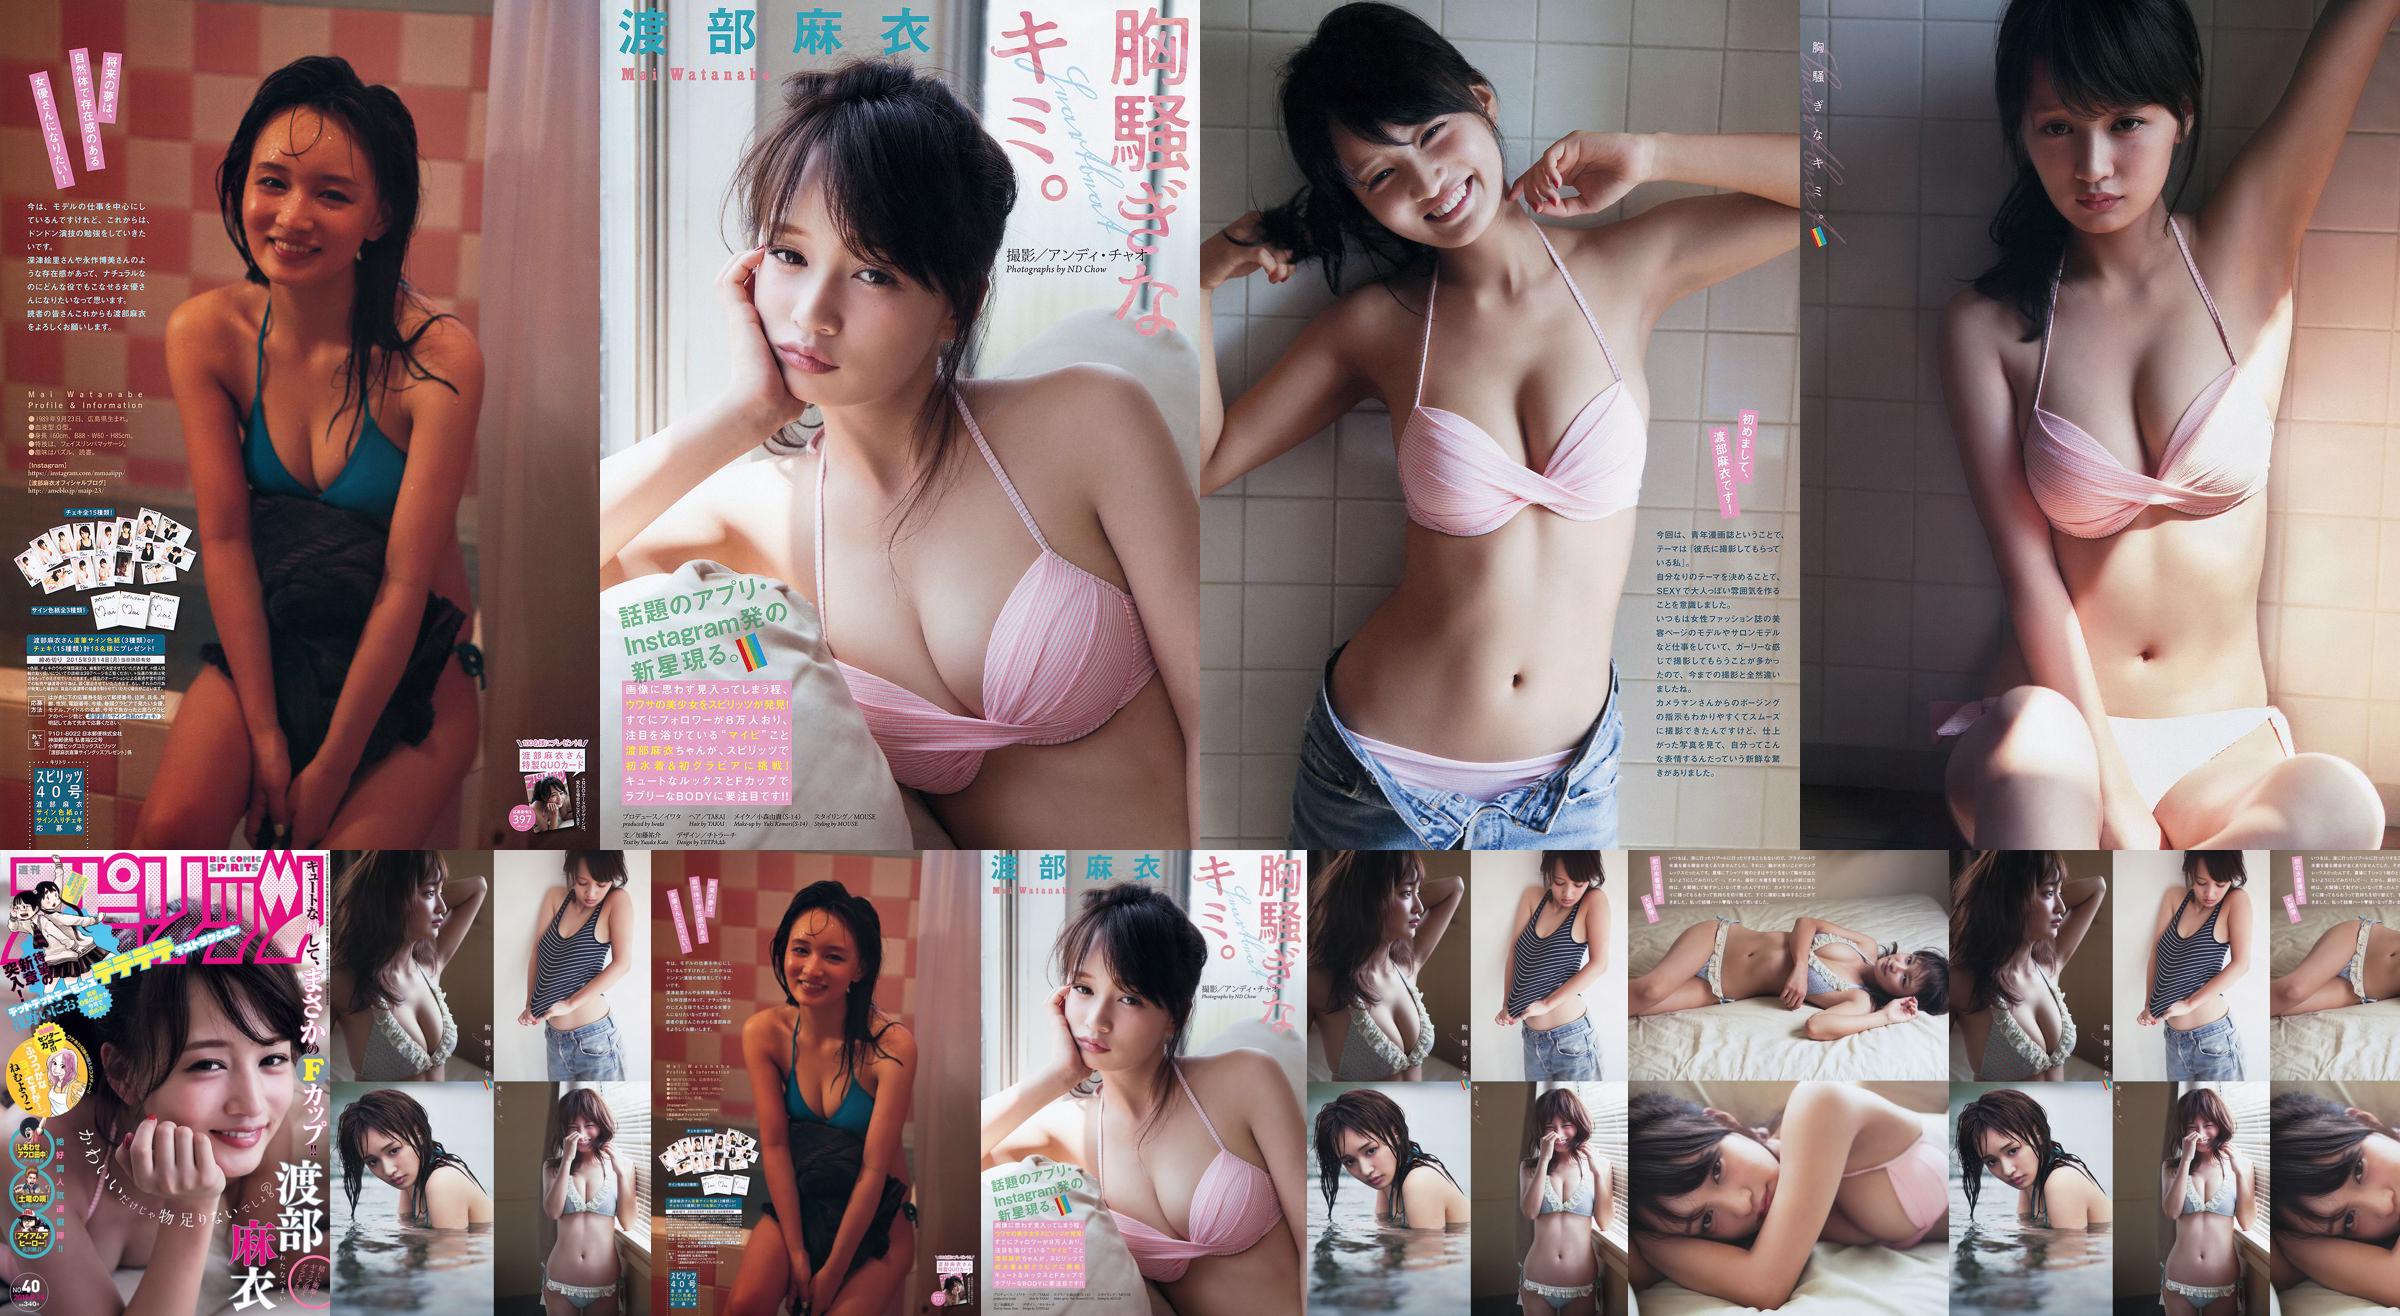 [Wöchentliche große Comic-Spirituosen] Watanabe Mai 2015 Nr. 40 Fotomagazin No.75feec Seite 74